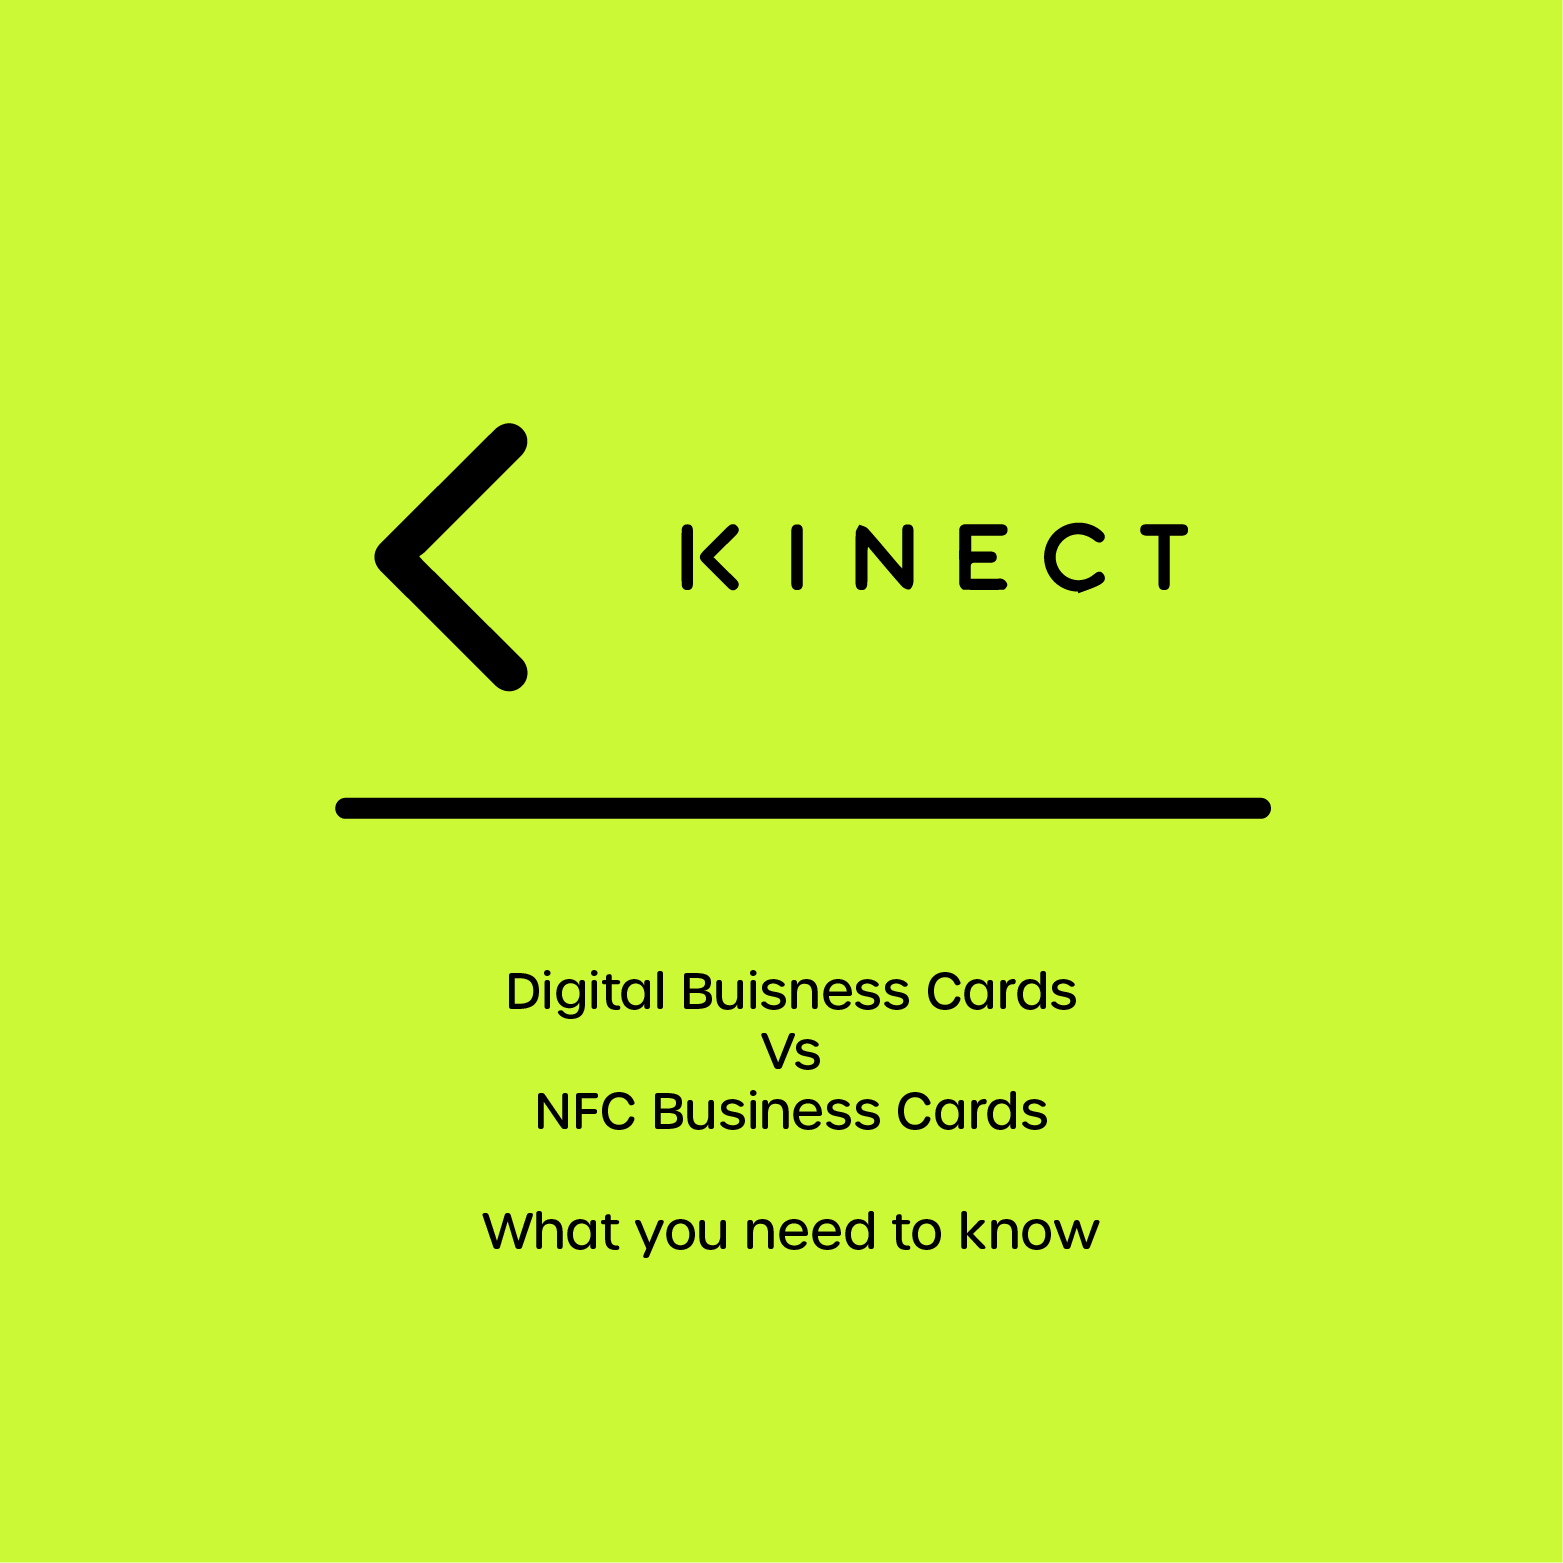 Digital Business Cards vs NFC Business Cards